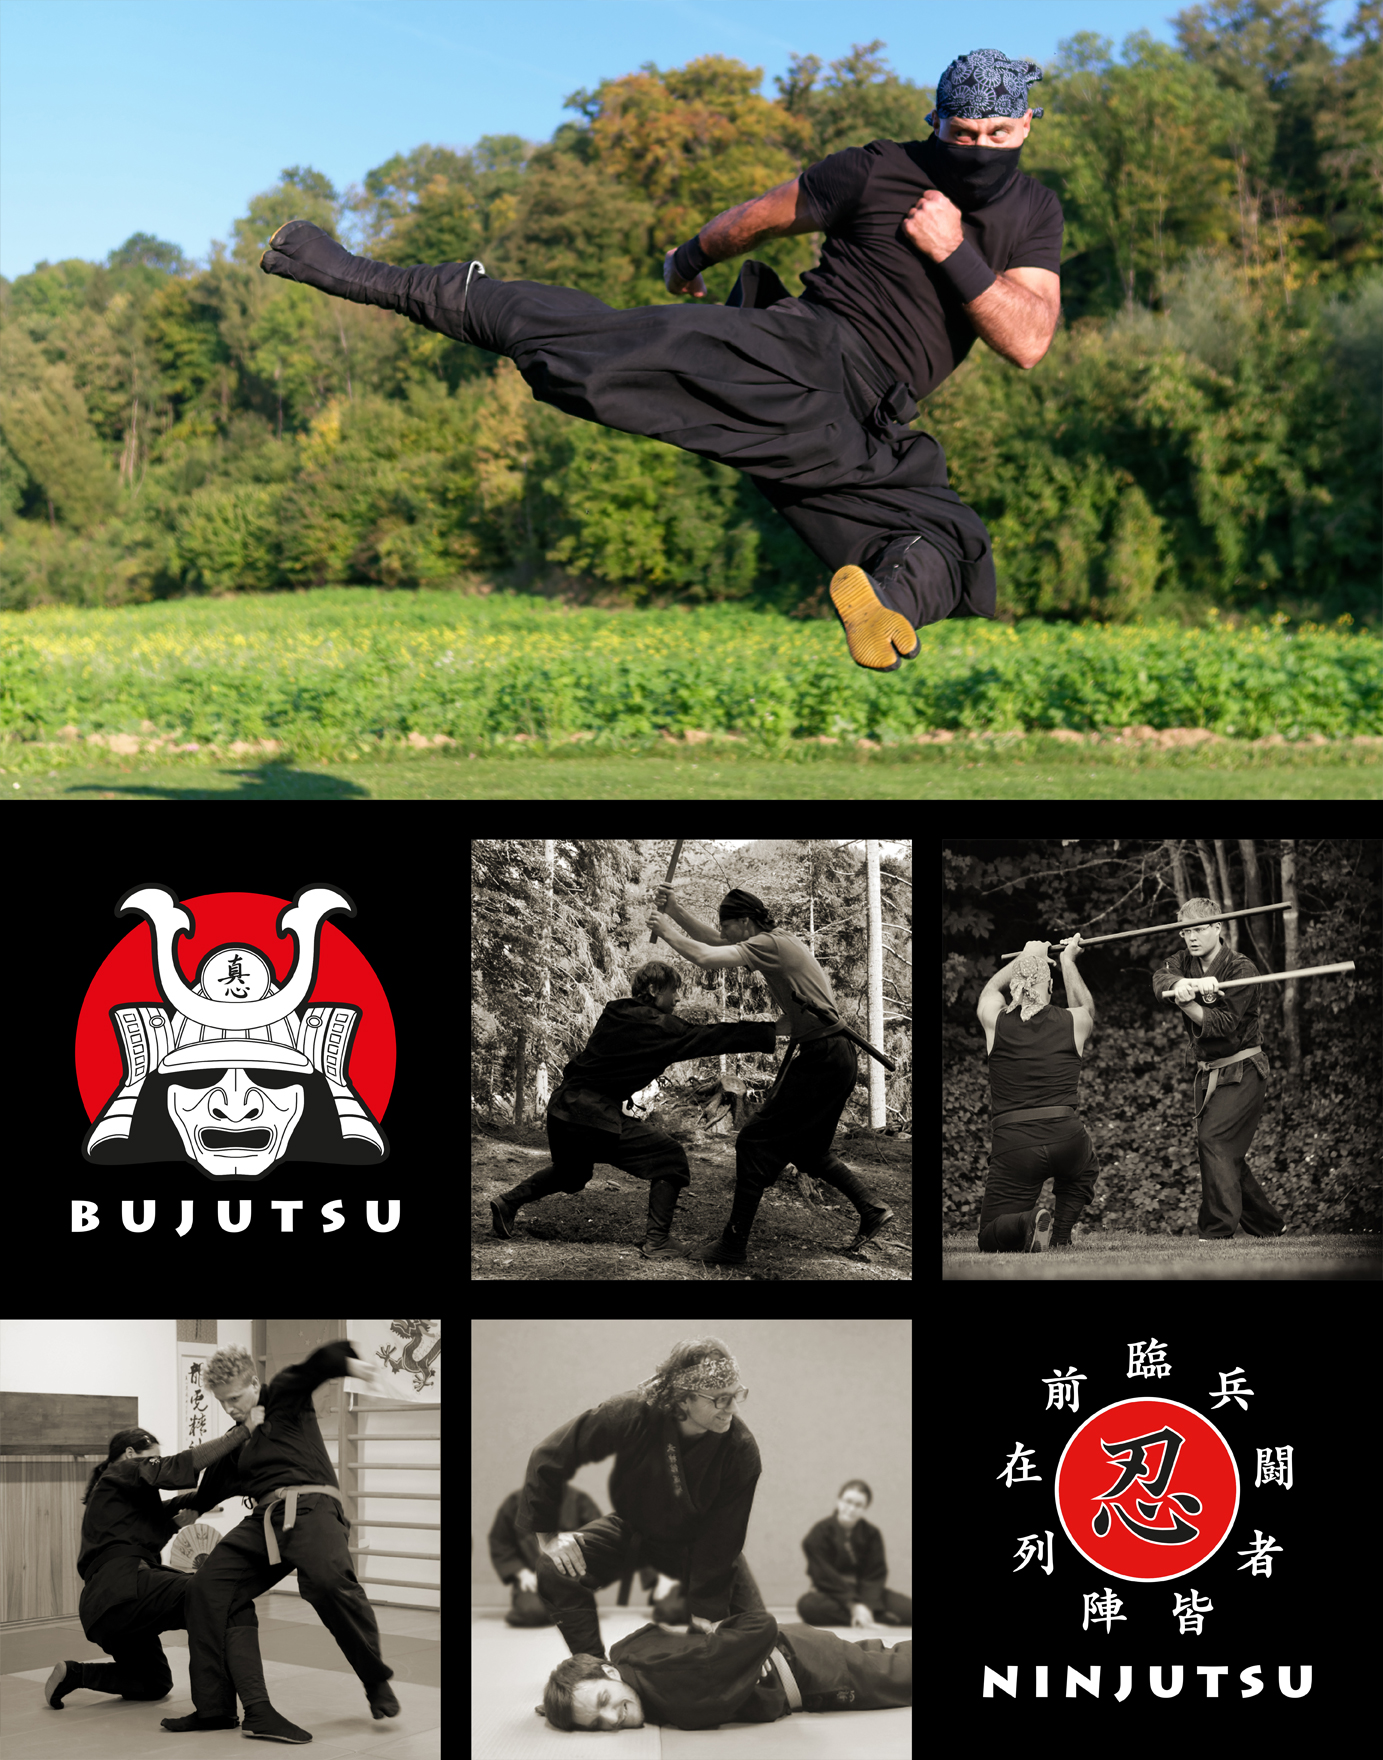 seishin arts-kampfkunst-bujutsu-ninjutsu-kampfkunst-wels-linz-01